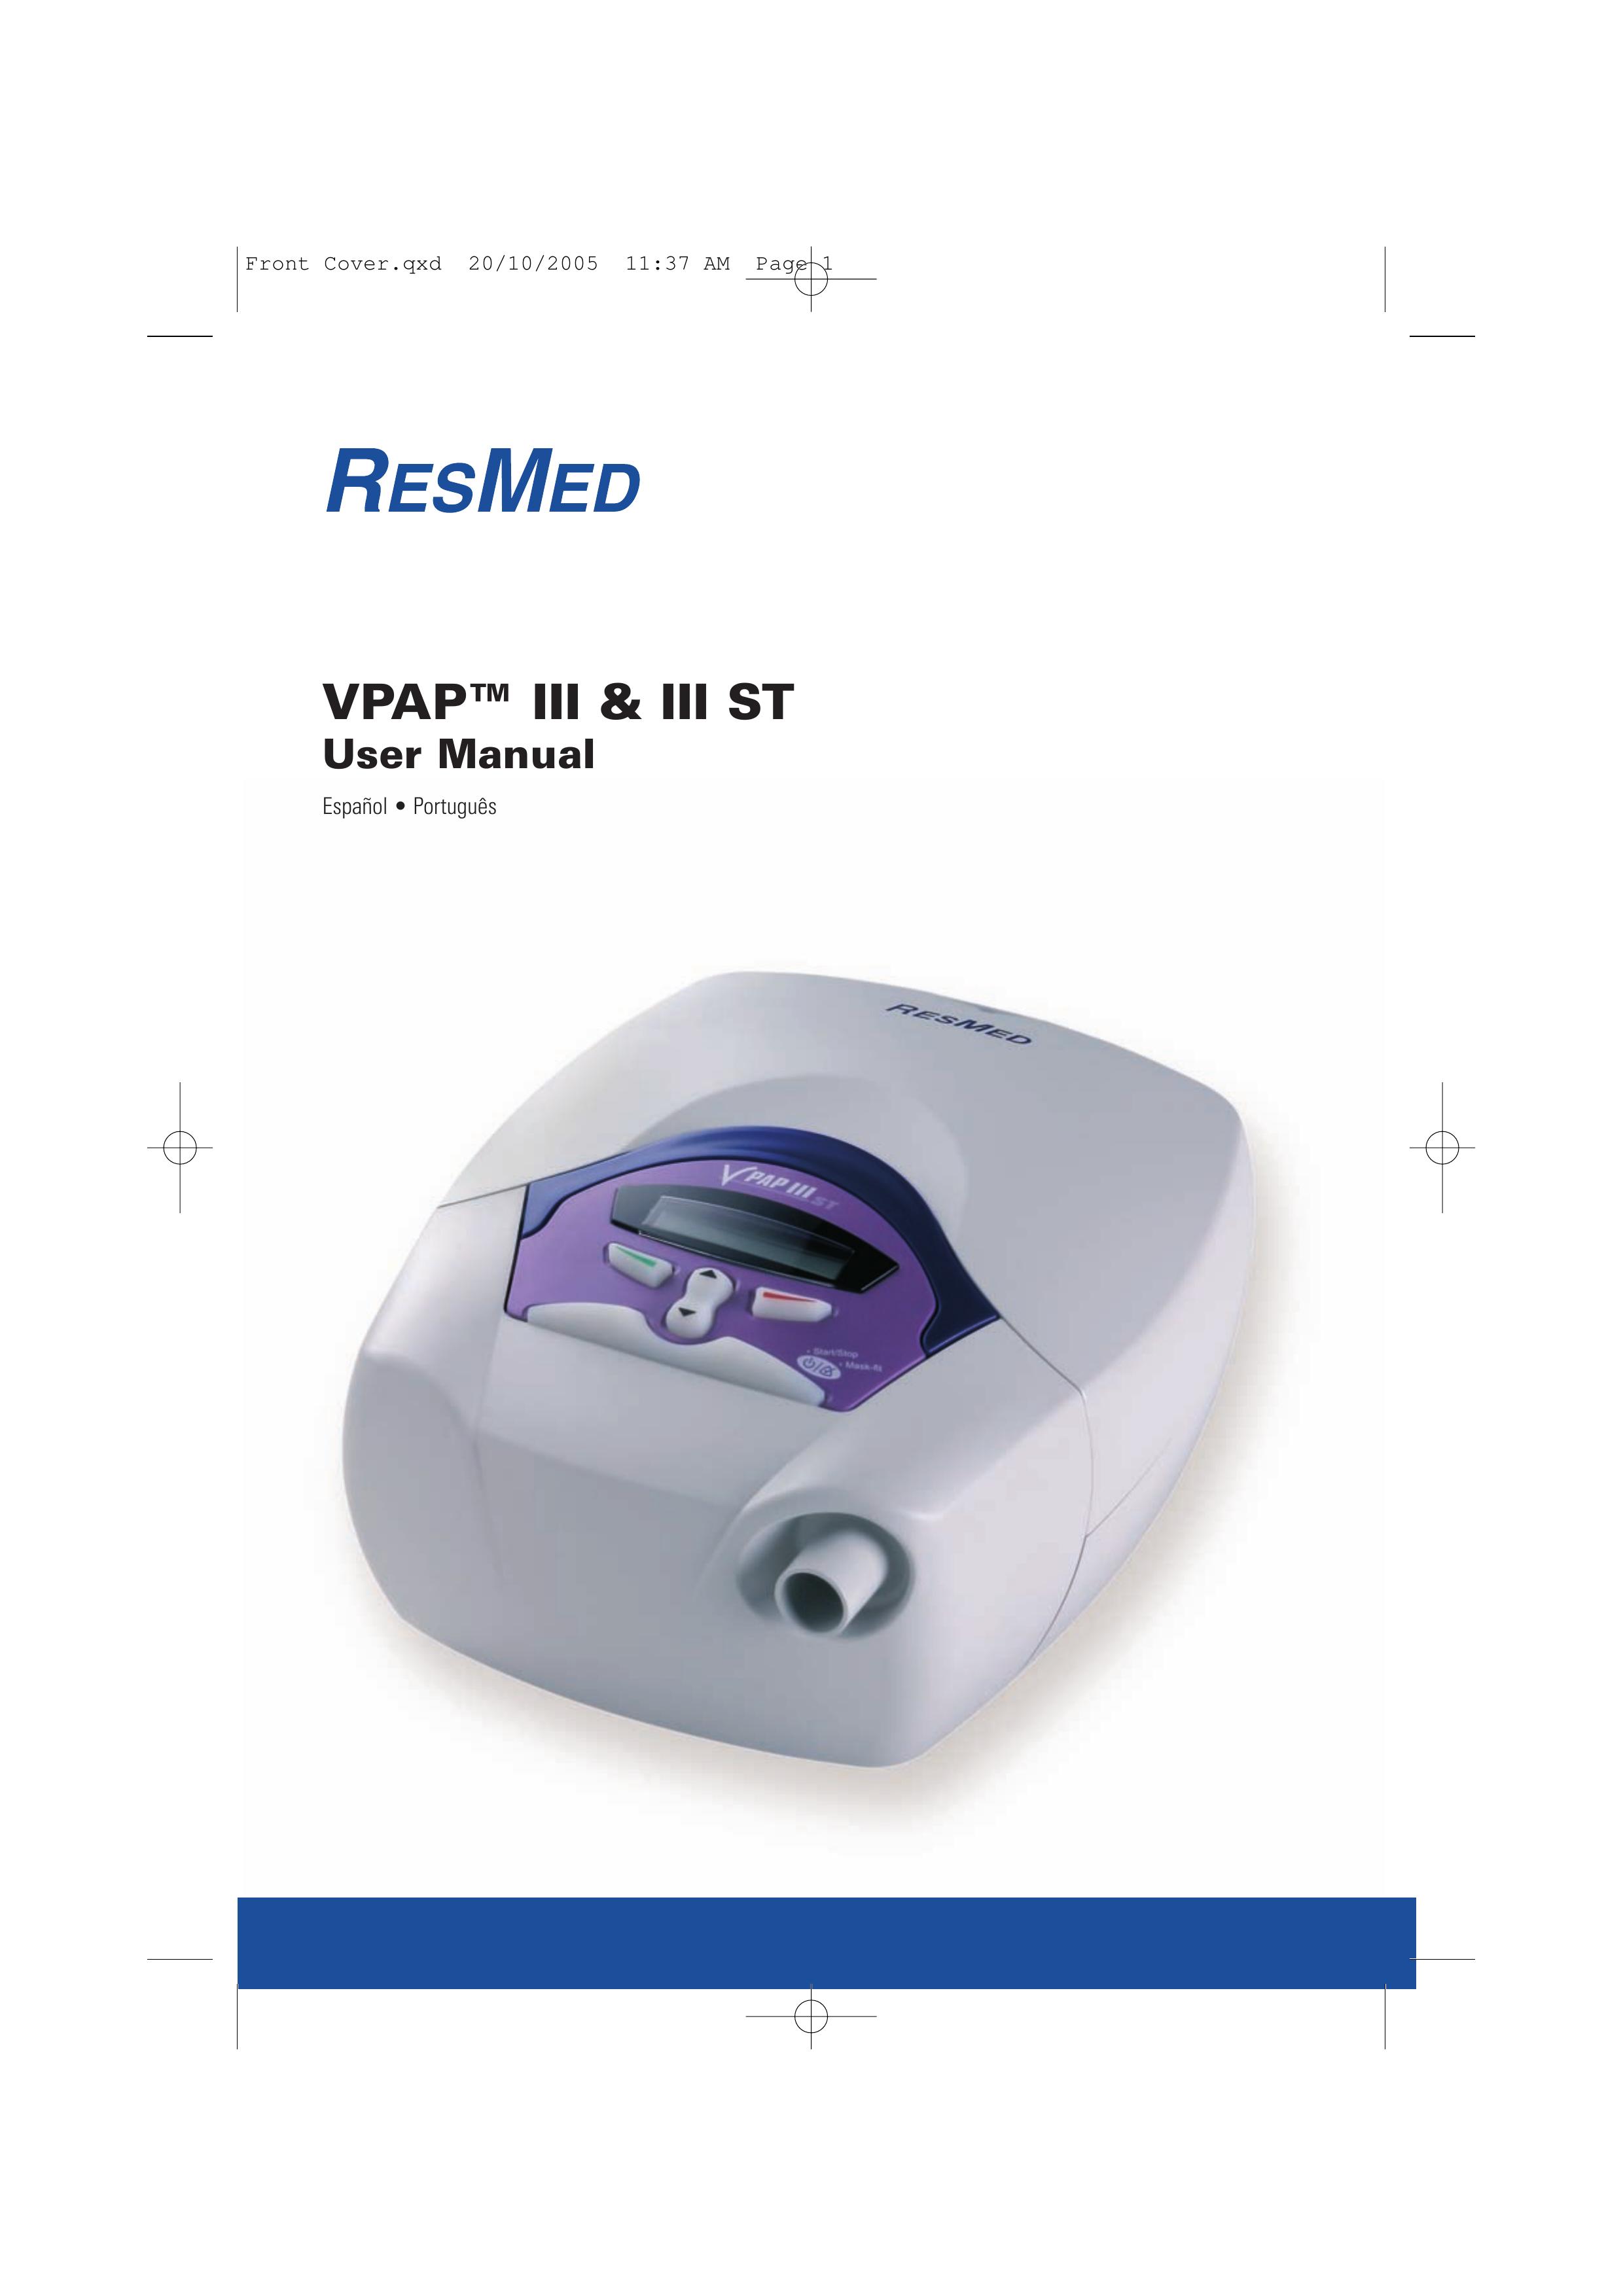 ResMed VPAPTm III$IIIst Sleep Apnea Machine User Manual